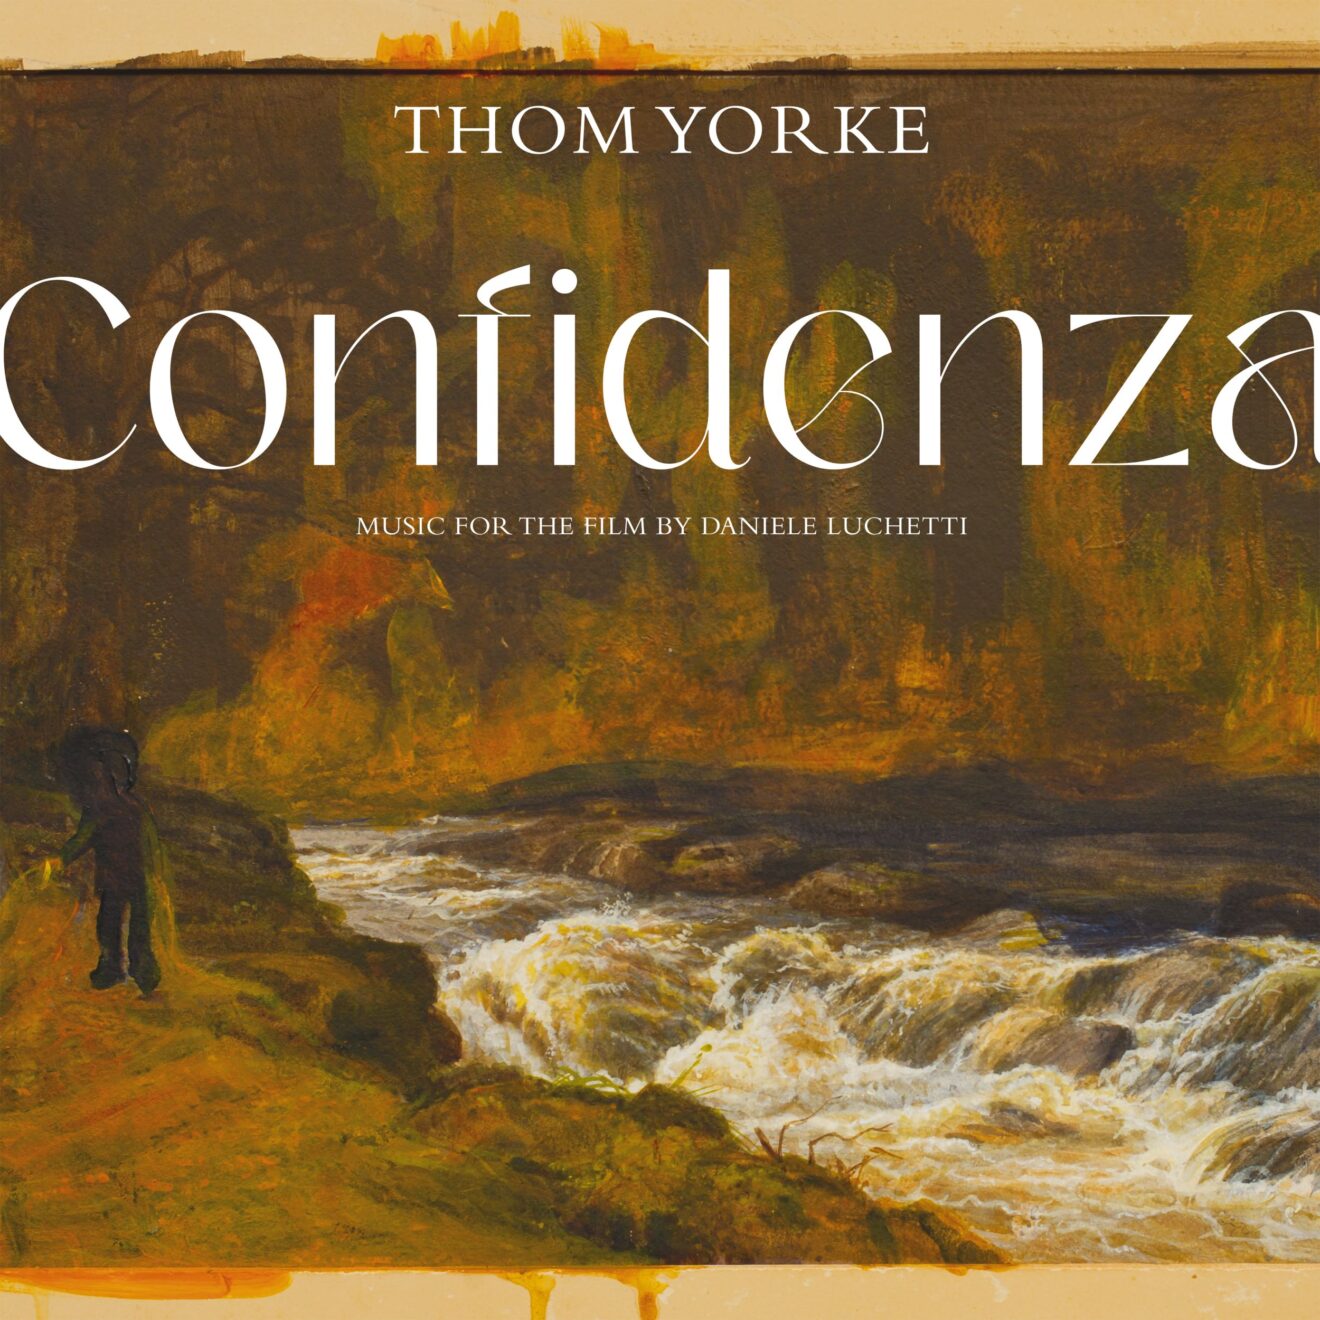 THOM YORKE CREATES SOUNDTRACK FOR CONFIDENZA